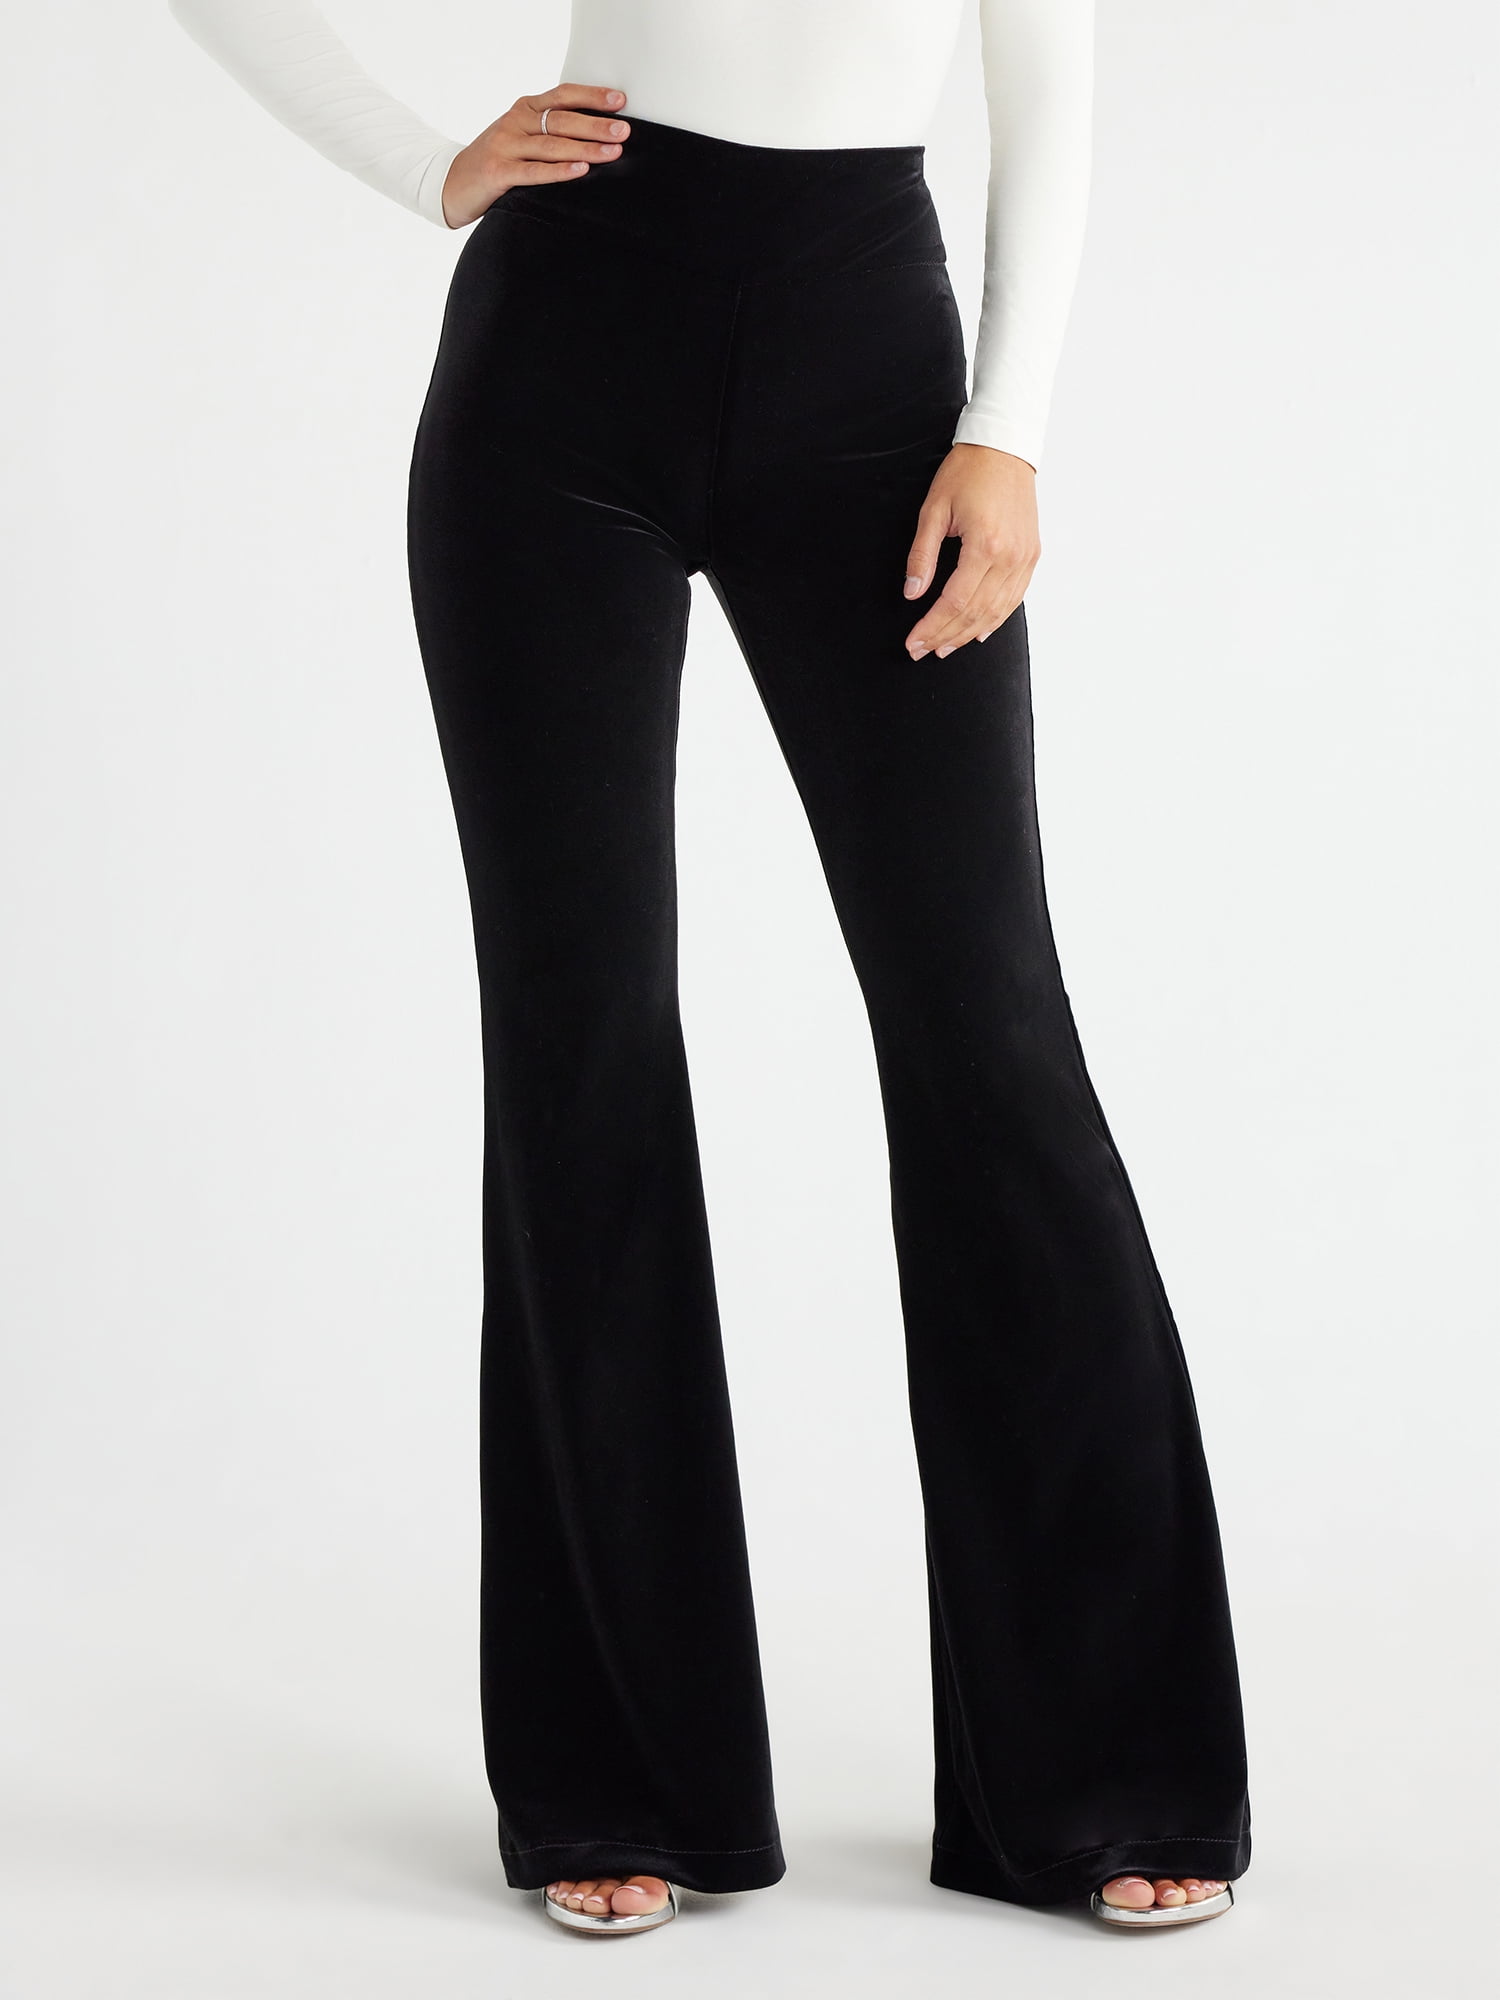 Claire Woman - Official Online Shop - Trousers & Shorts - Claire - Janina -  Jeans